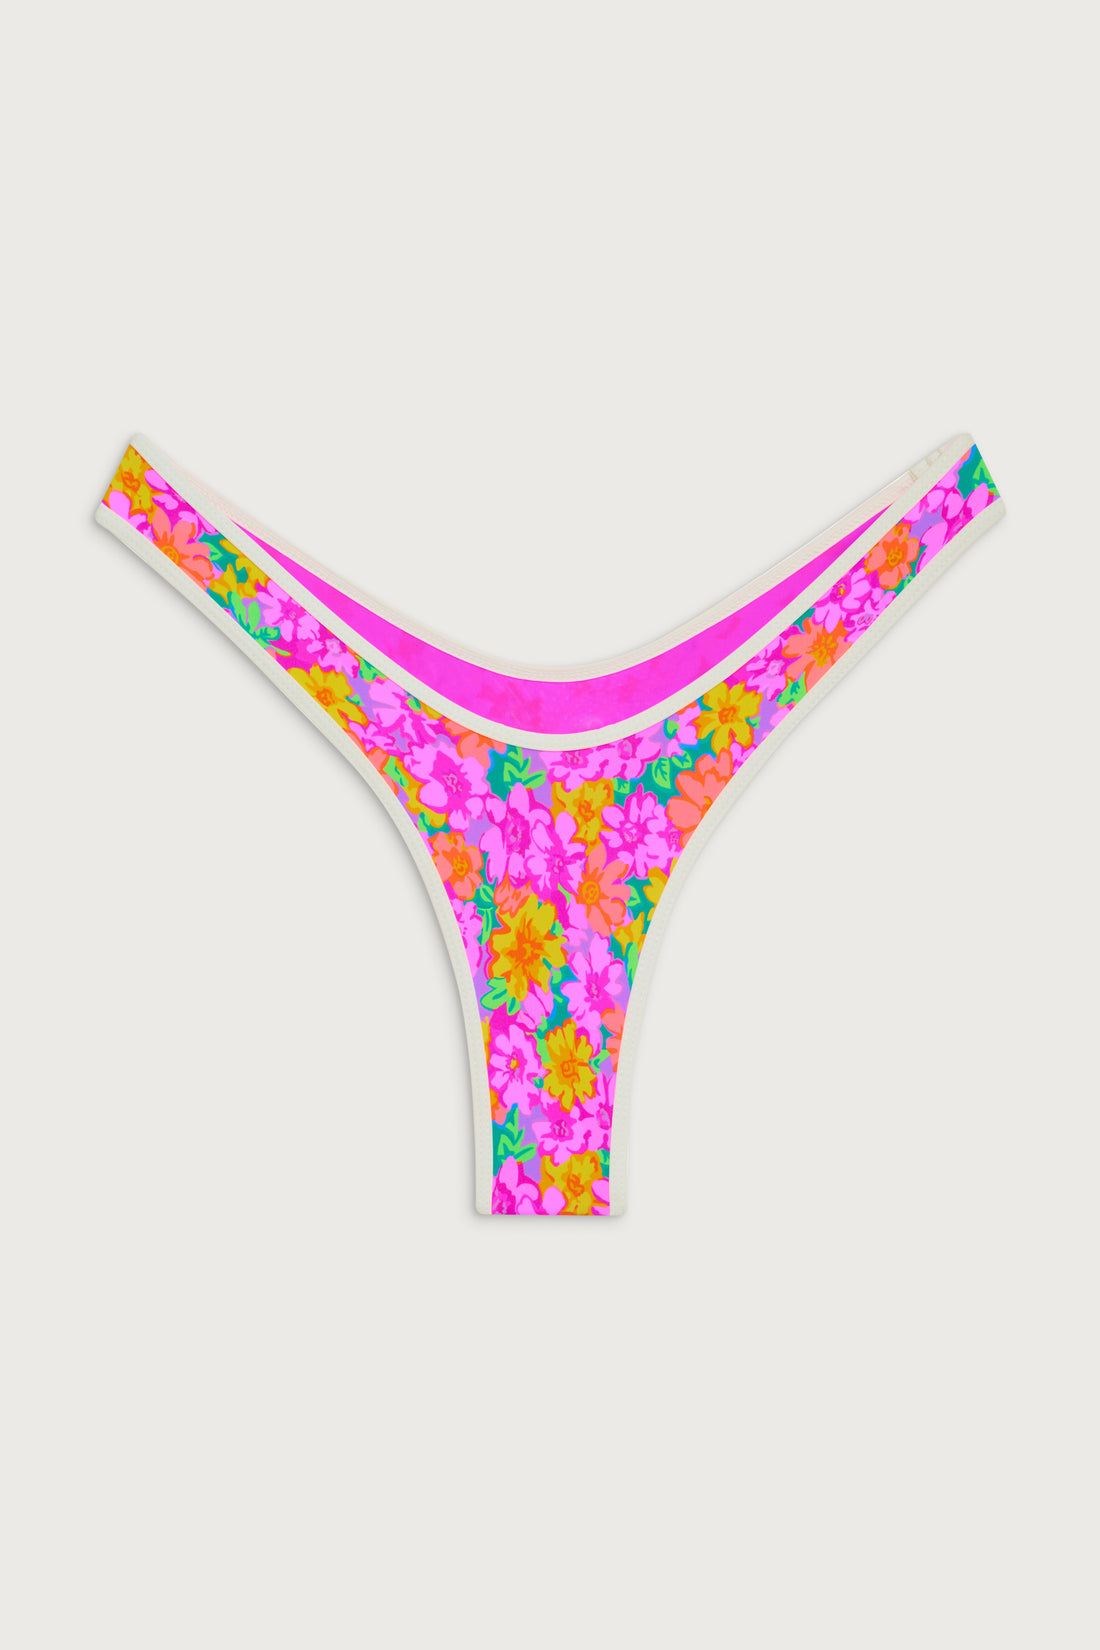 Frankies Bikinis Full Moon Floral Micro Bikini Bottom - Daisy Pond